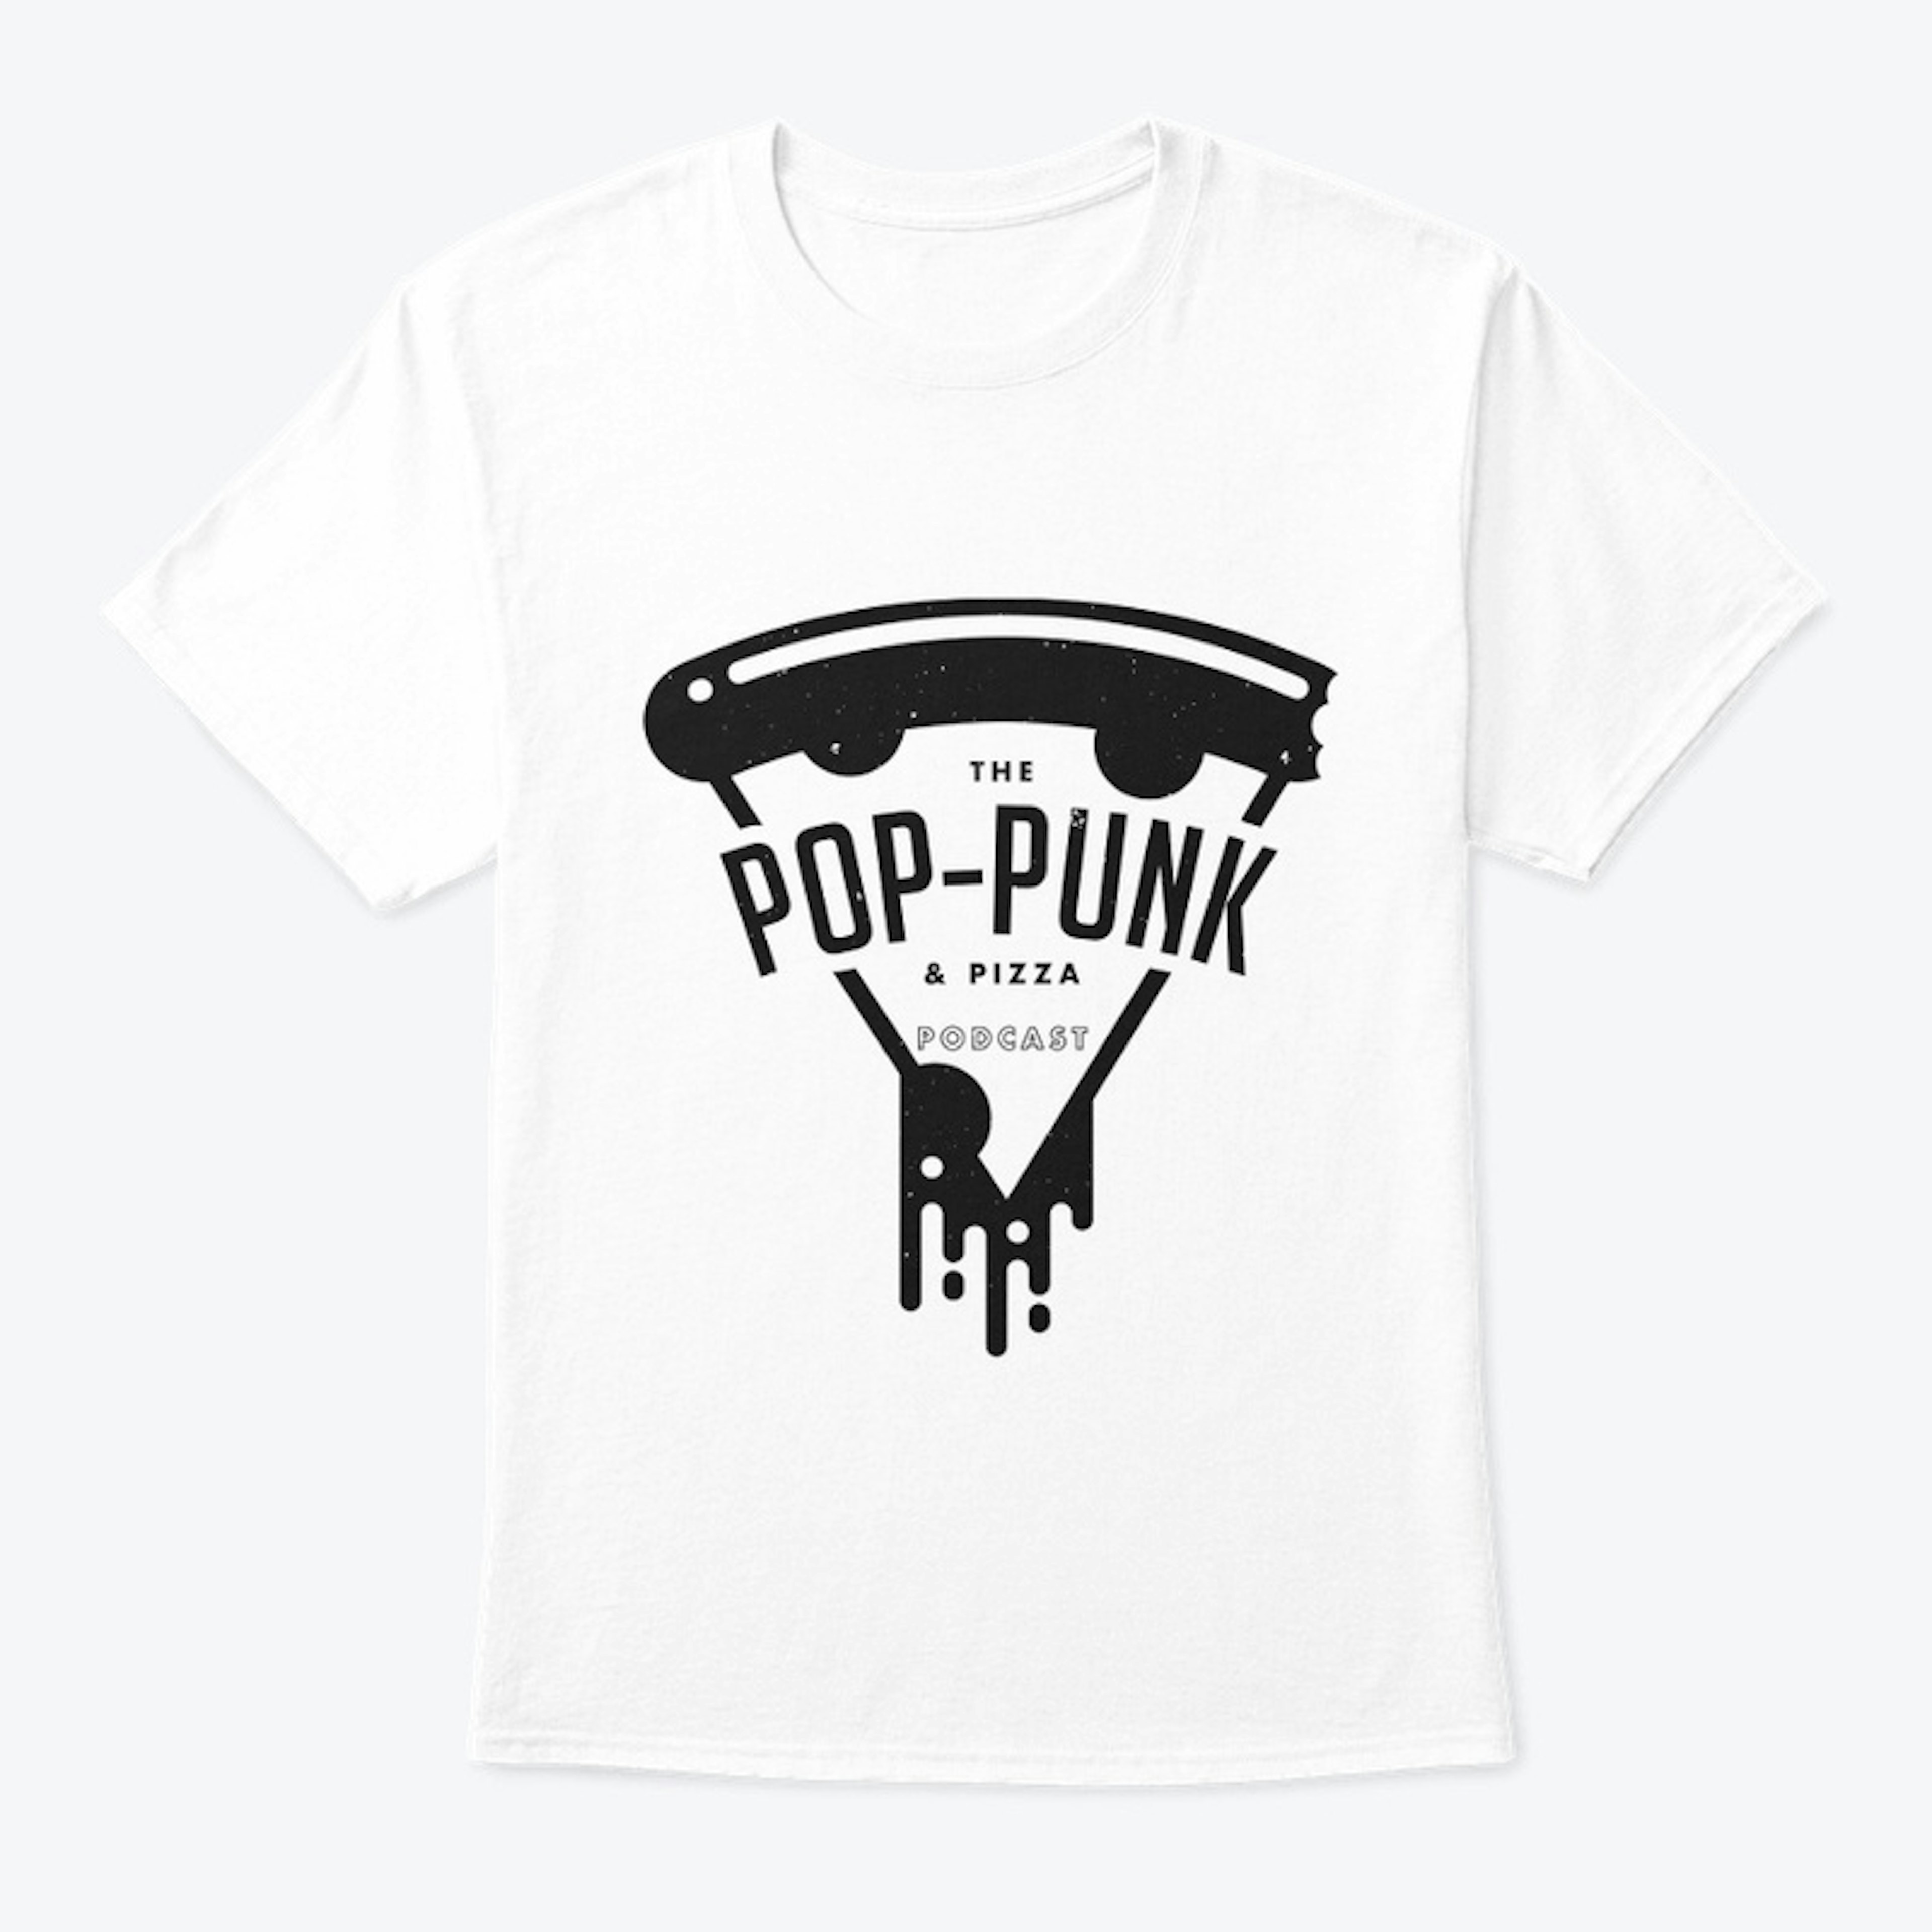 Pop-Punk & Pizza logo